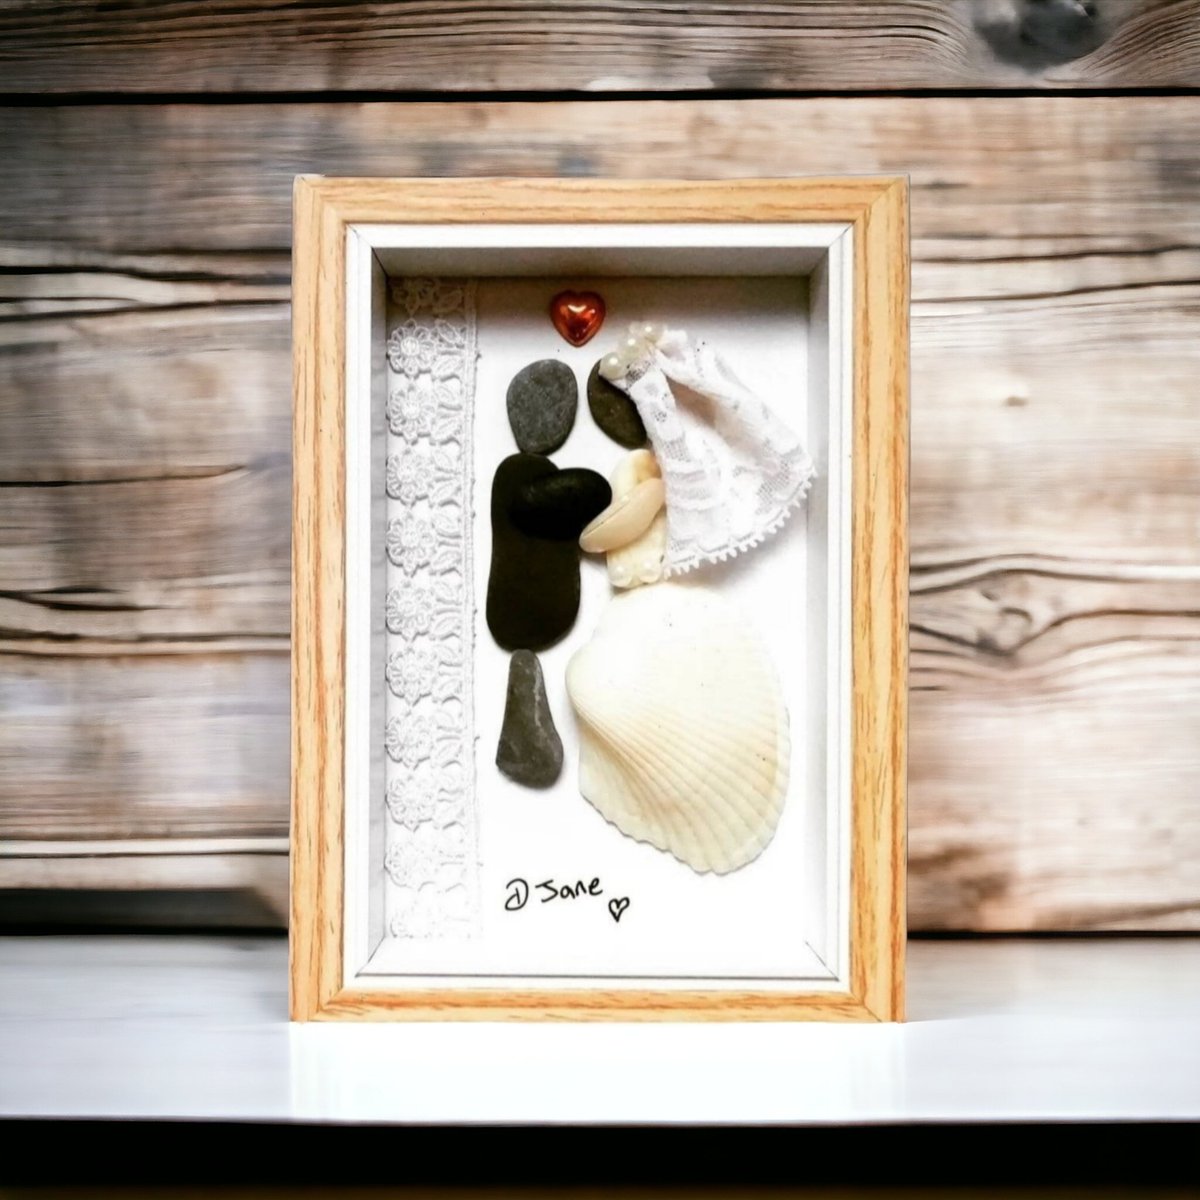 Wedding pebble art Mr and Mrs x👰🎩
#TheCraftersUk #getthatgift #SmartSocial #HandmadeHour #UKGiftAM #handmadeinbritain #BizBubble #networkwiththrive #UKGiftHour #bizhour #Craftsuk #craftbizparty #etsyfinds #womaninbizhour #inbizhour #elevenseshour #smallbizzsunday